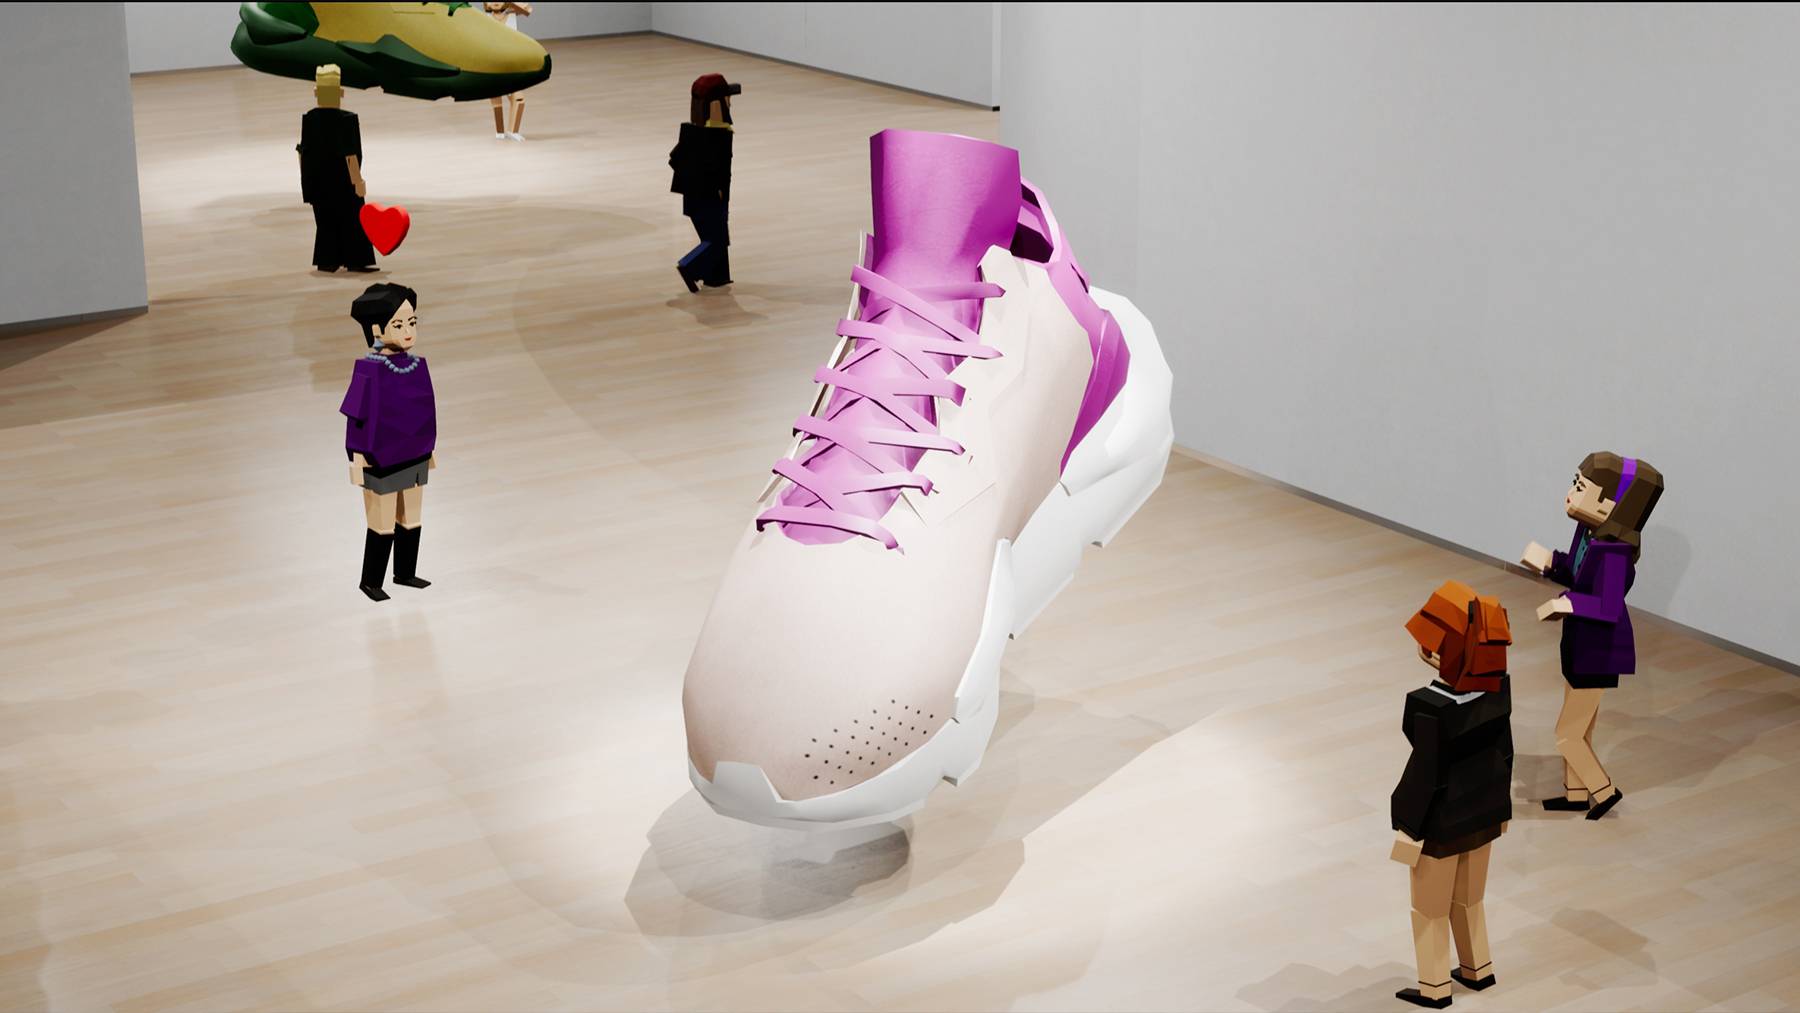 3d rendering of a metaverse sneaker shop.